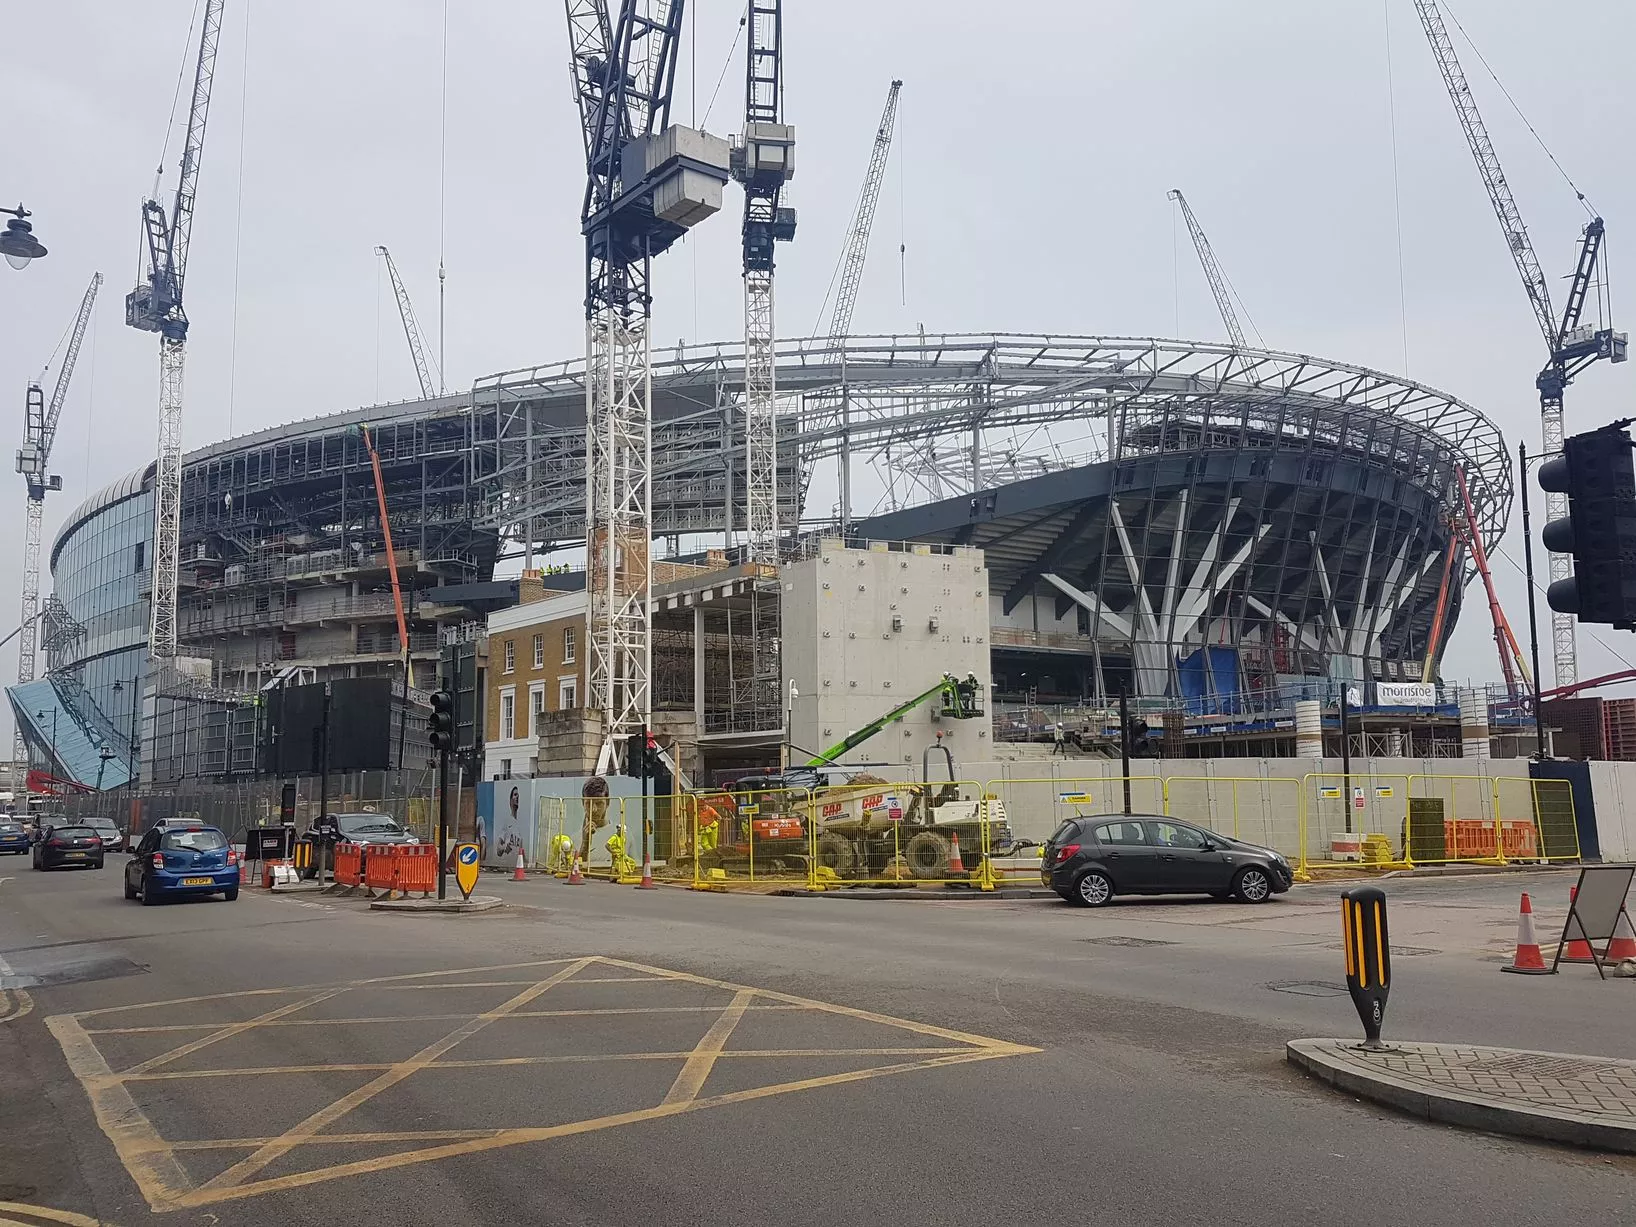 New-Spurs-stadium-245-16.jpg